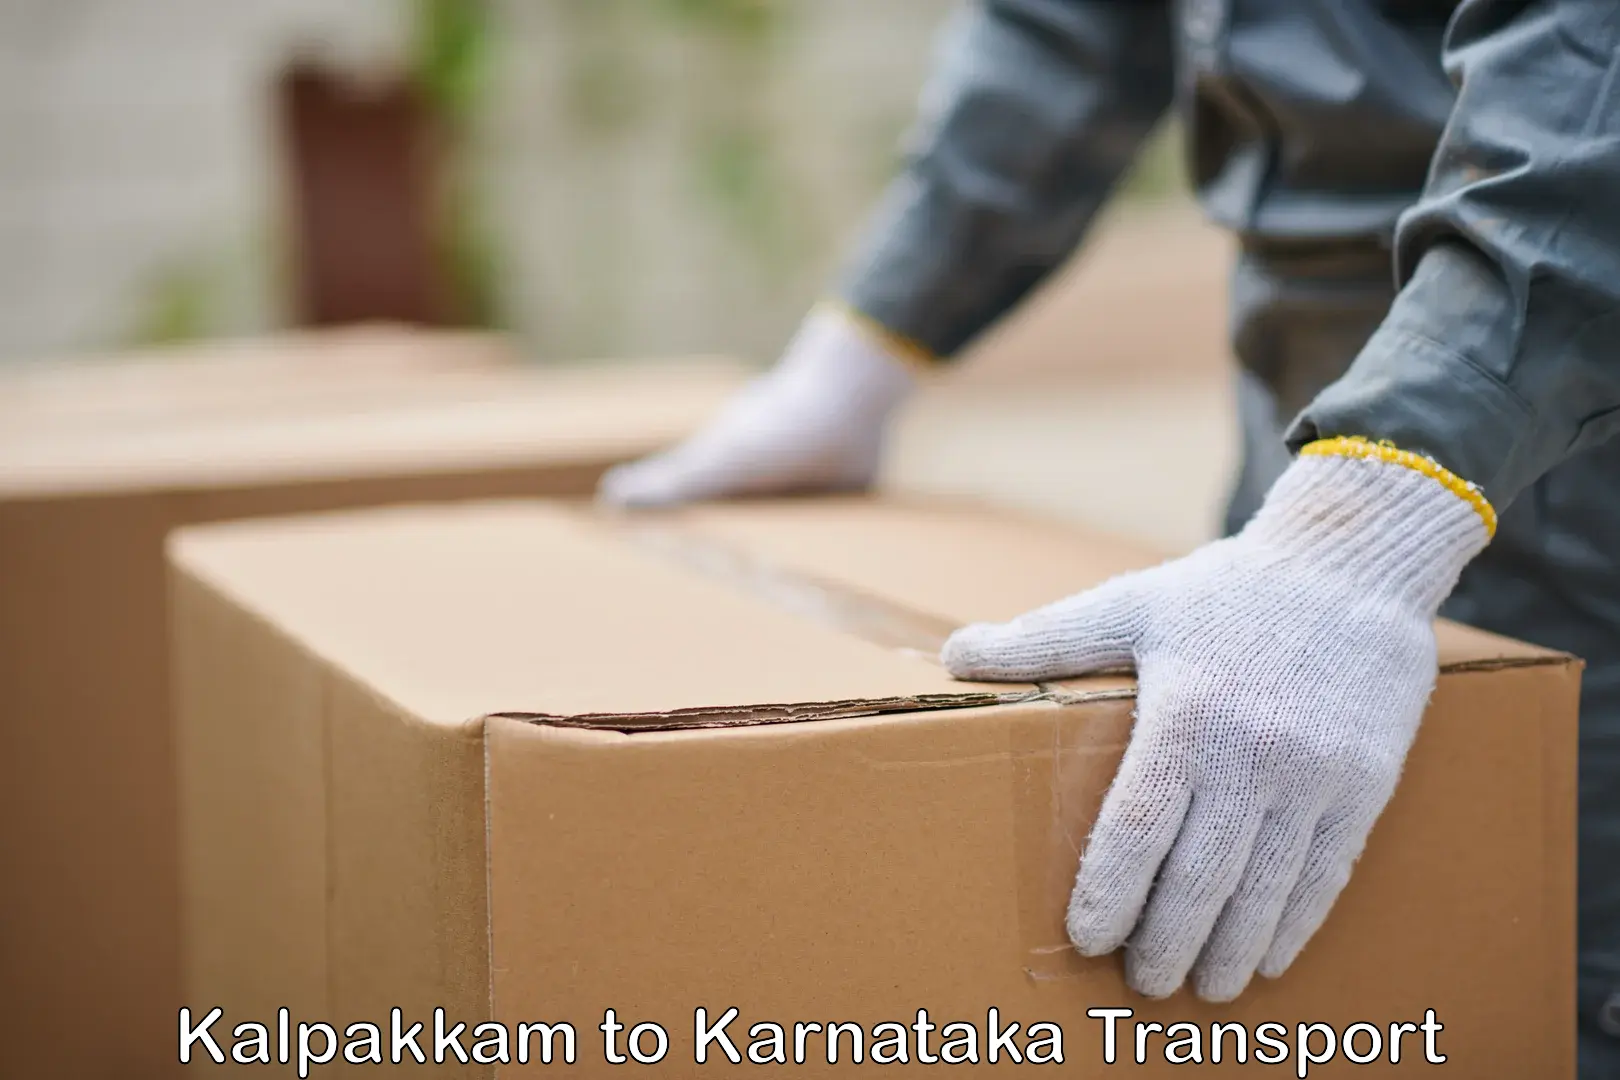 Container transportation services in Kalpakkam to Karnataka